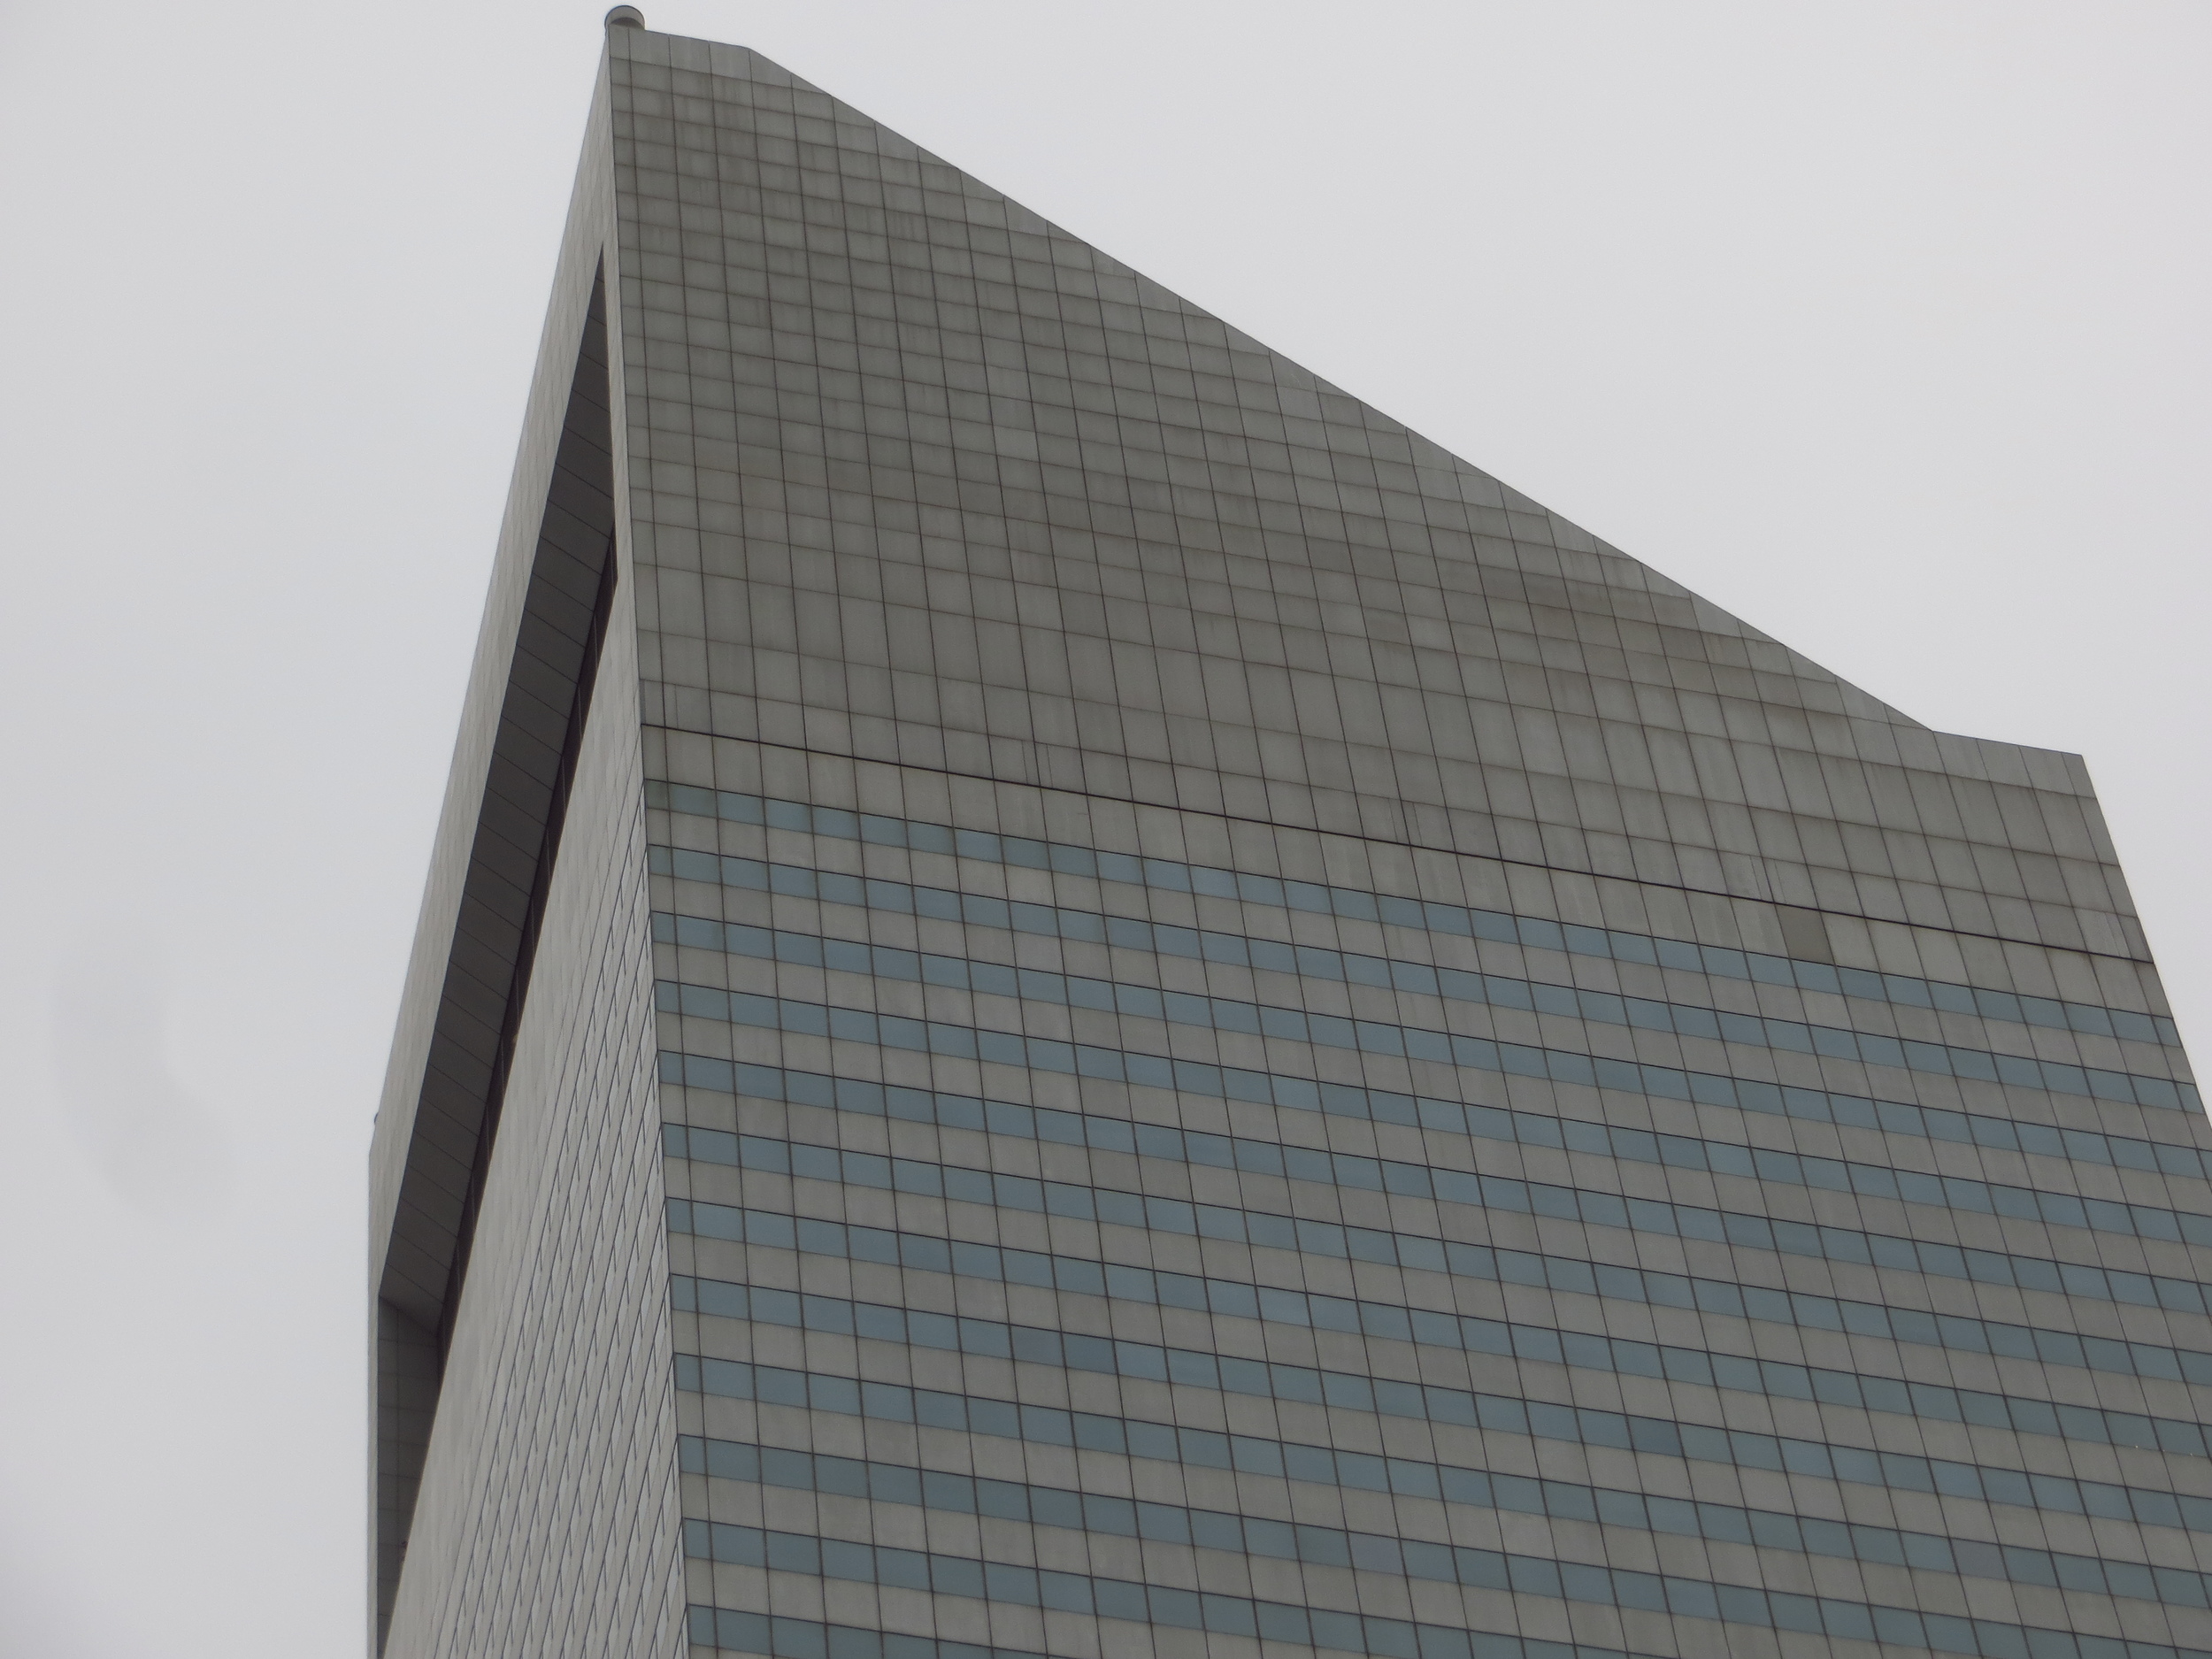 Top of Citigroup Center